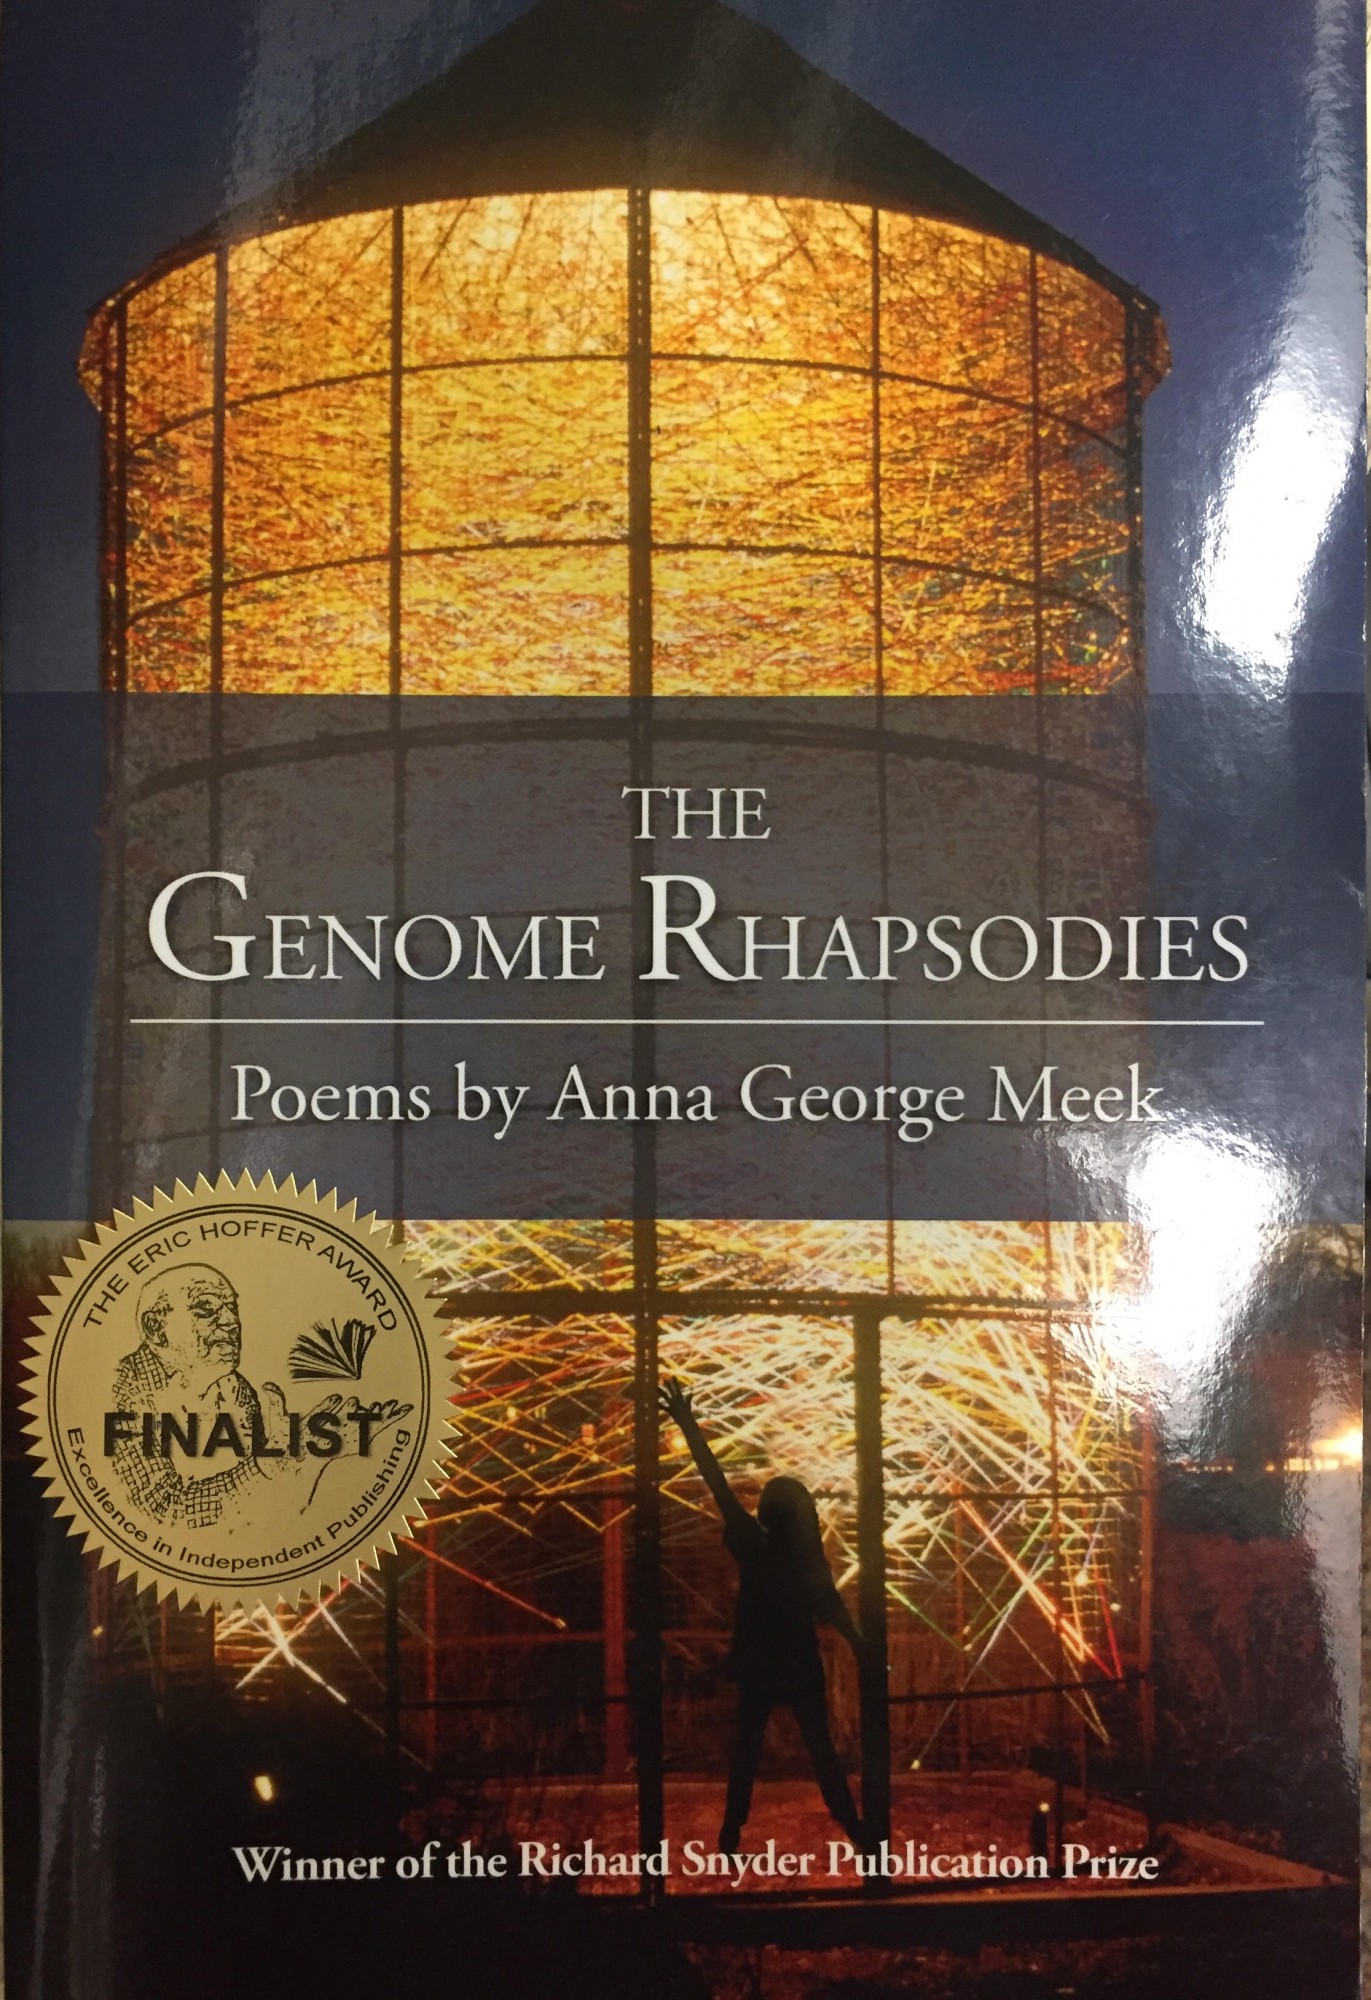 Anna George Meek's The Genome Rhapsodies Is Eric Hoffer Book Award Finalist